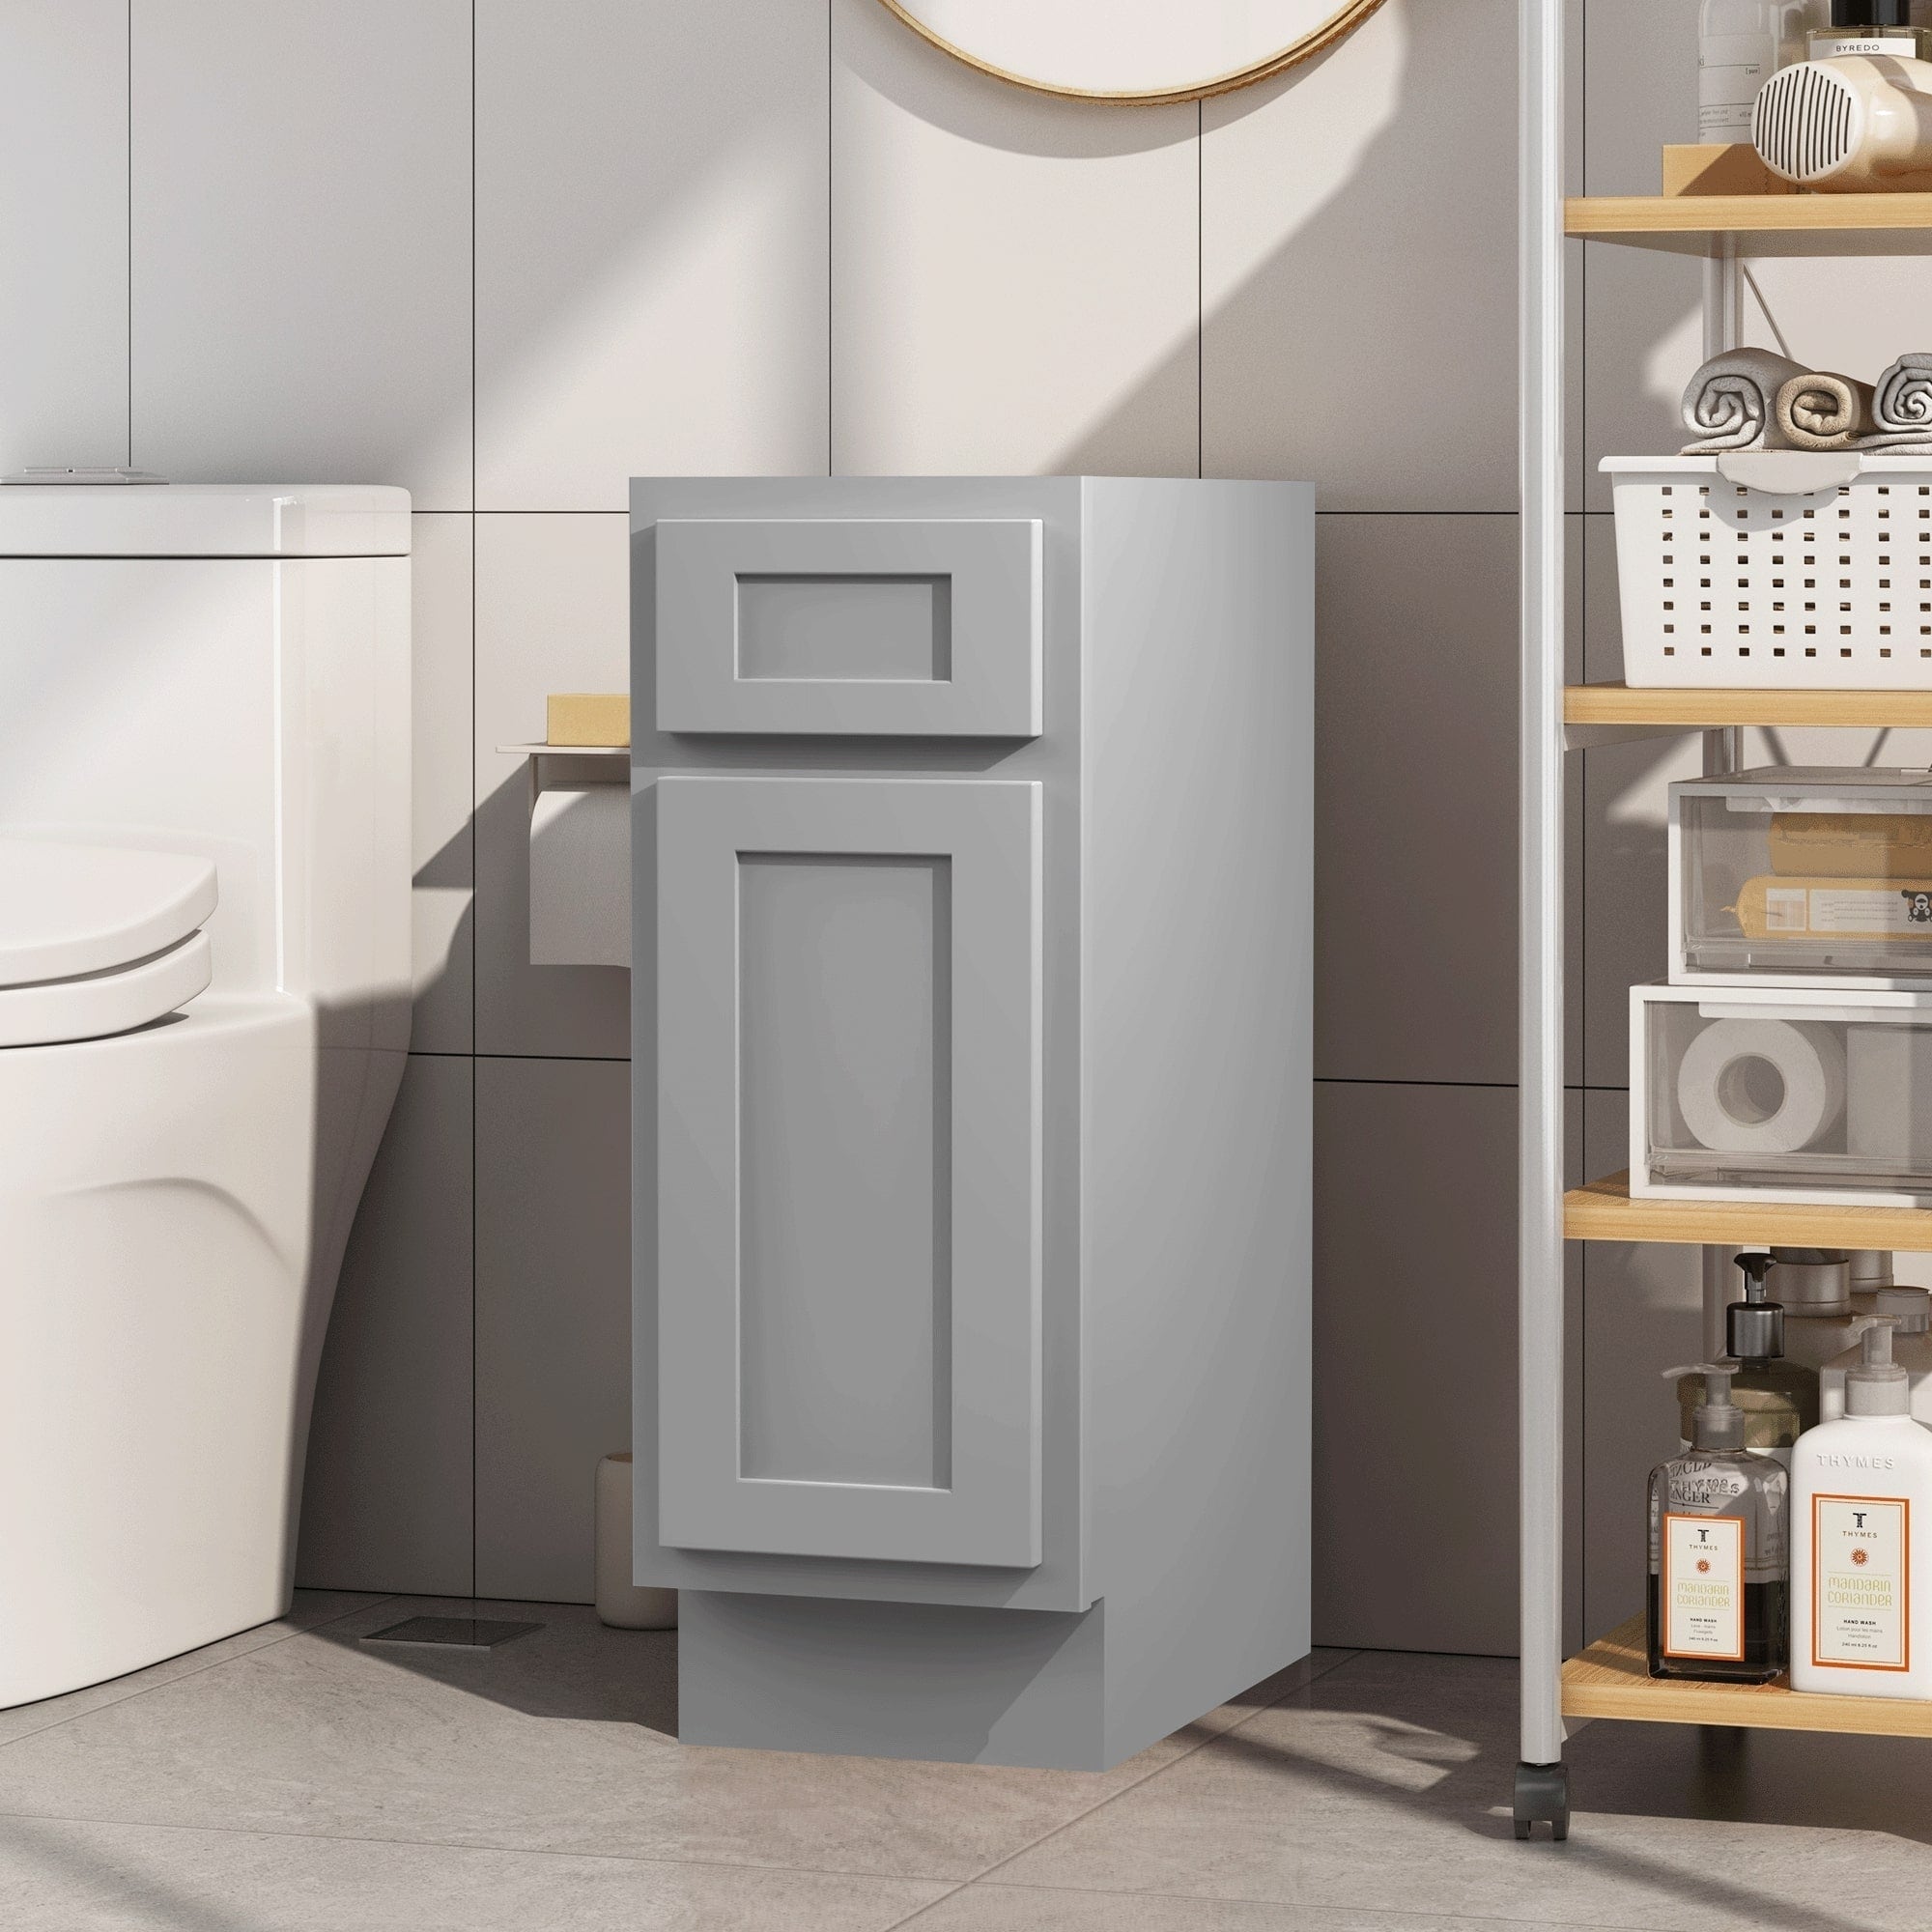 Vanity & Base Bathroom Cabinets for Storage